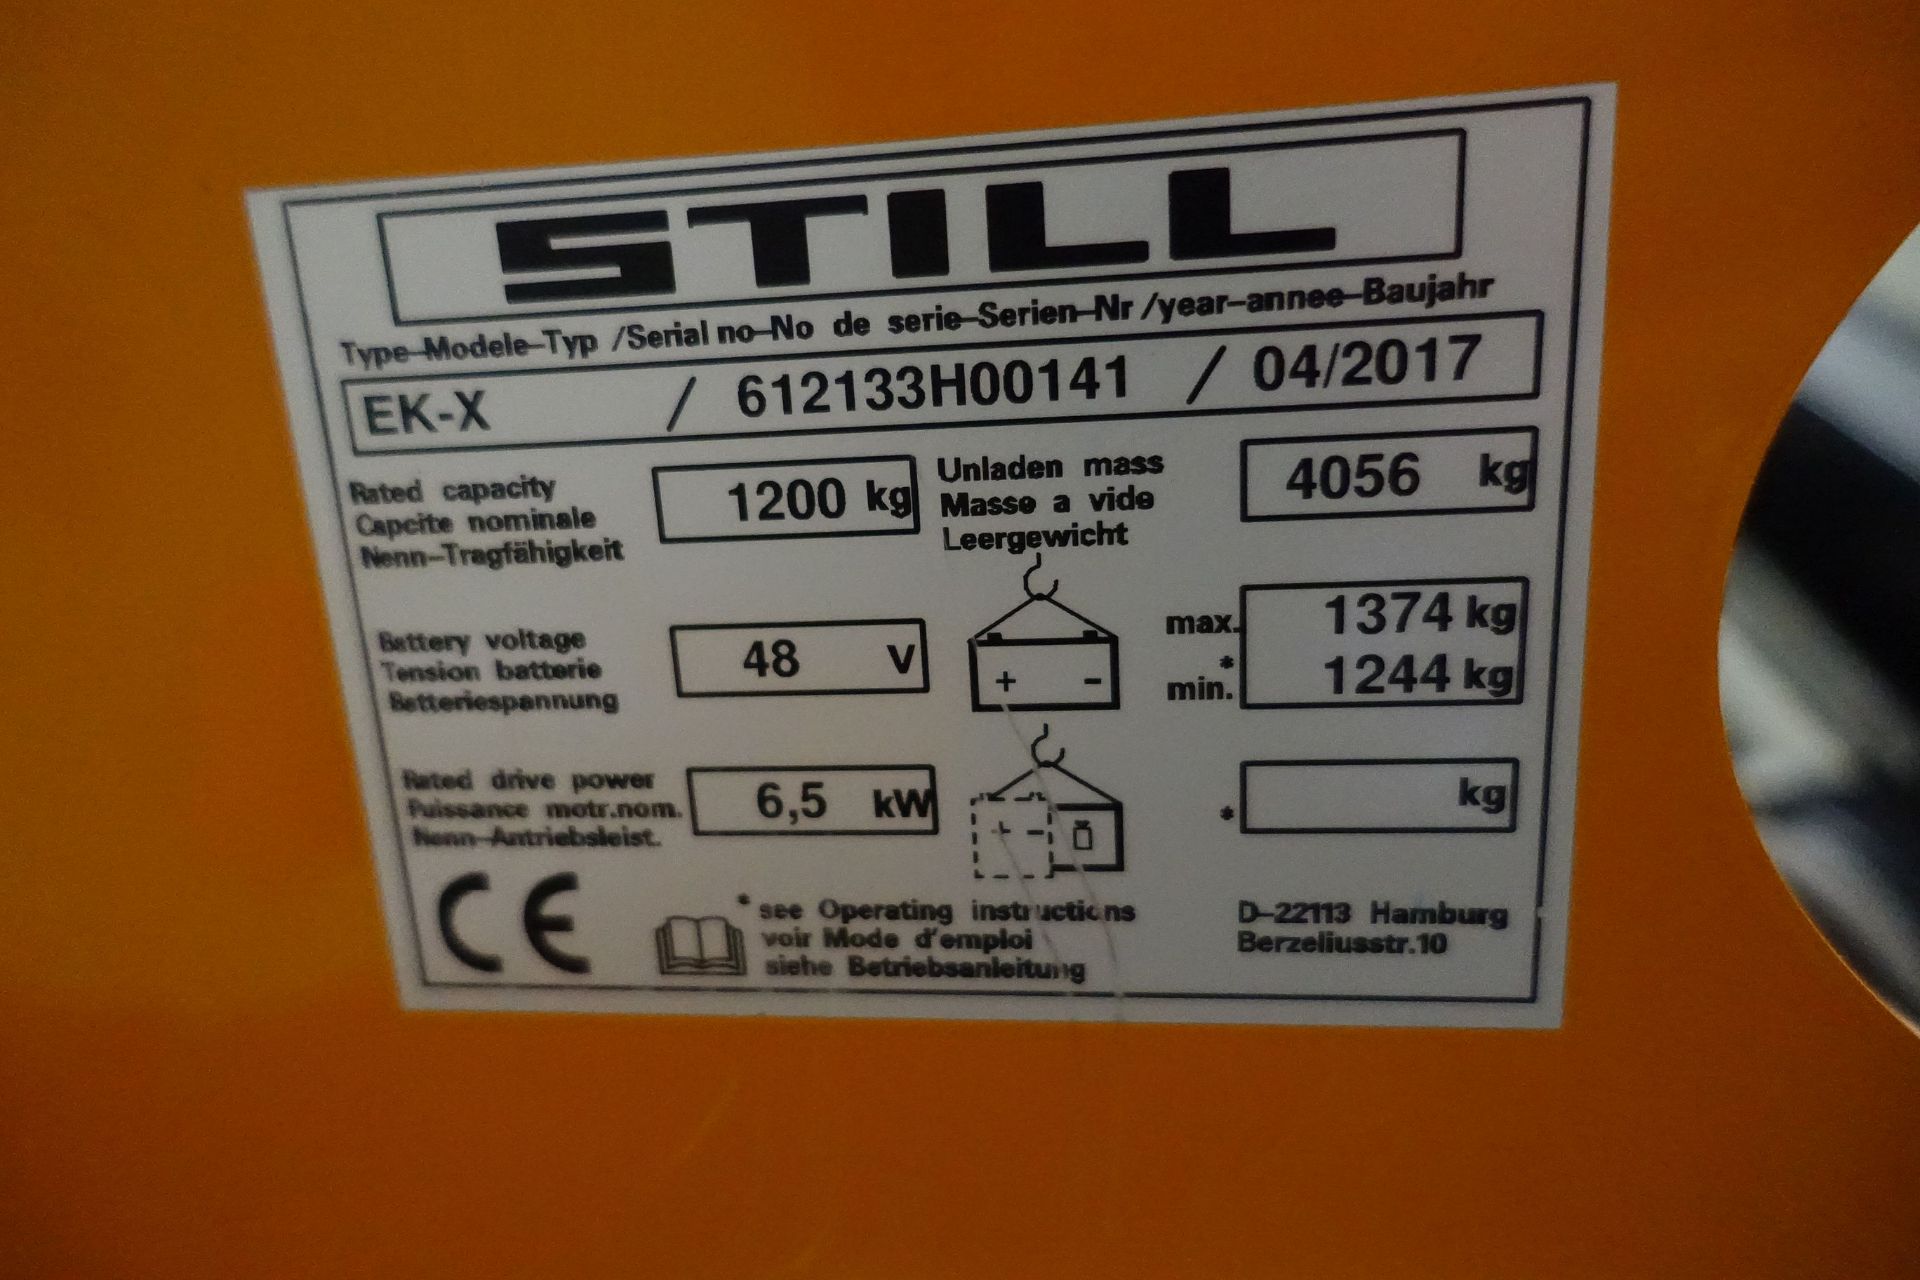 STILL 'EK-X' Electric Order Picker, 1,200kg Capacity, Ser # 612133H00141 (2017) - Image 15 of 44